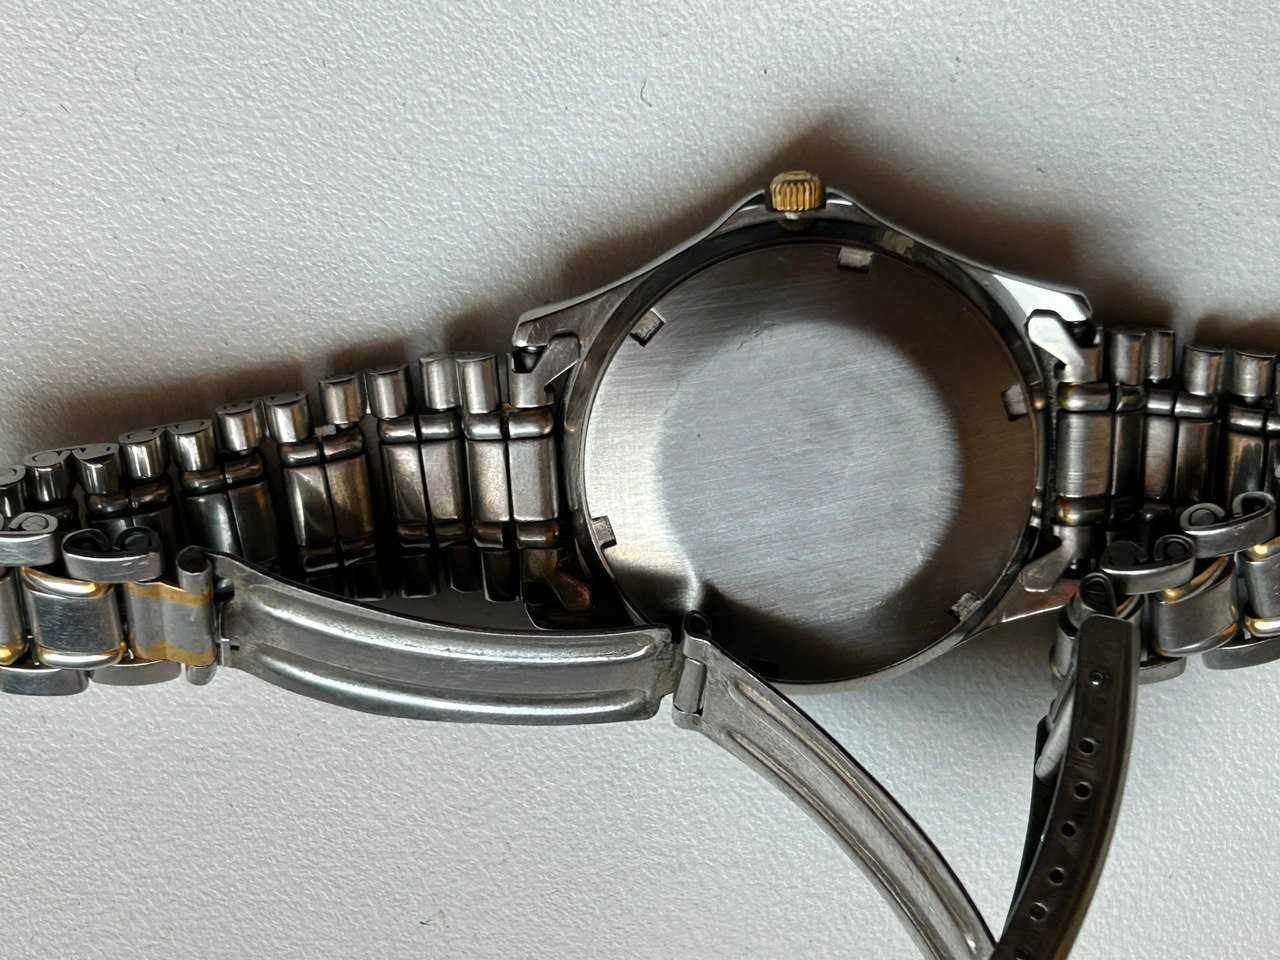 часы Omega Швейцария оригинал